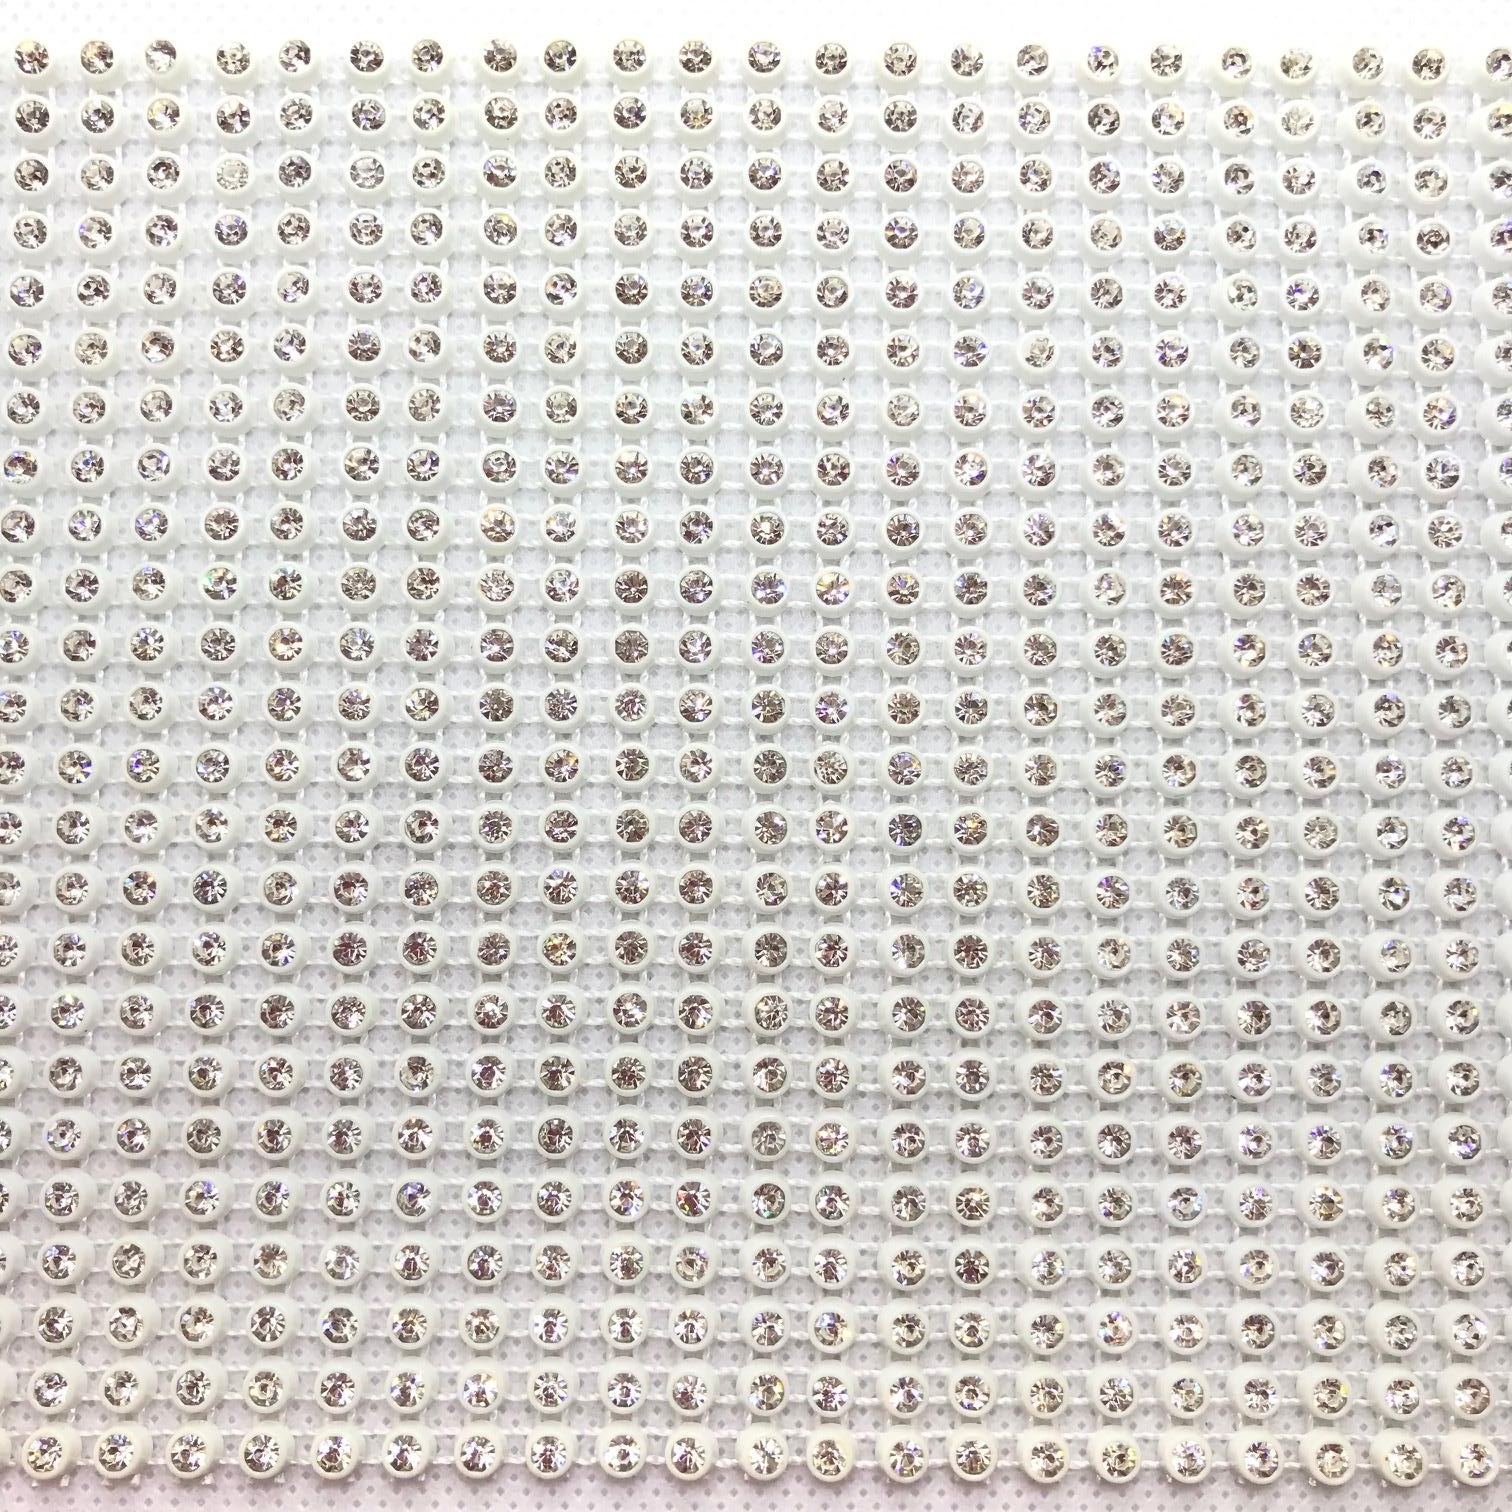 Bande de strass a coudre 3mm blanc strass cristal 24 rangs